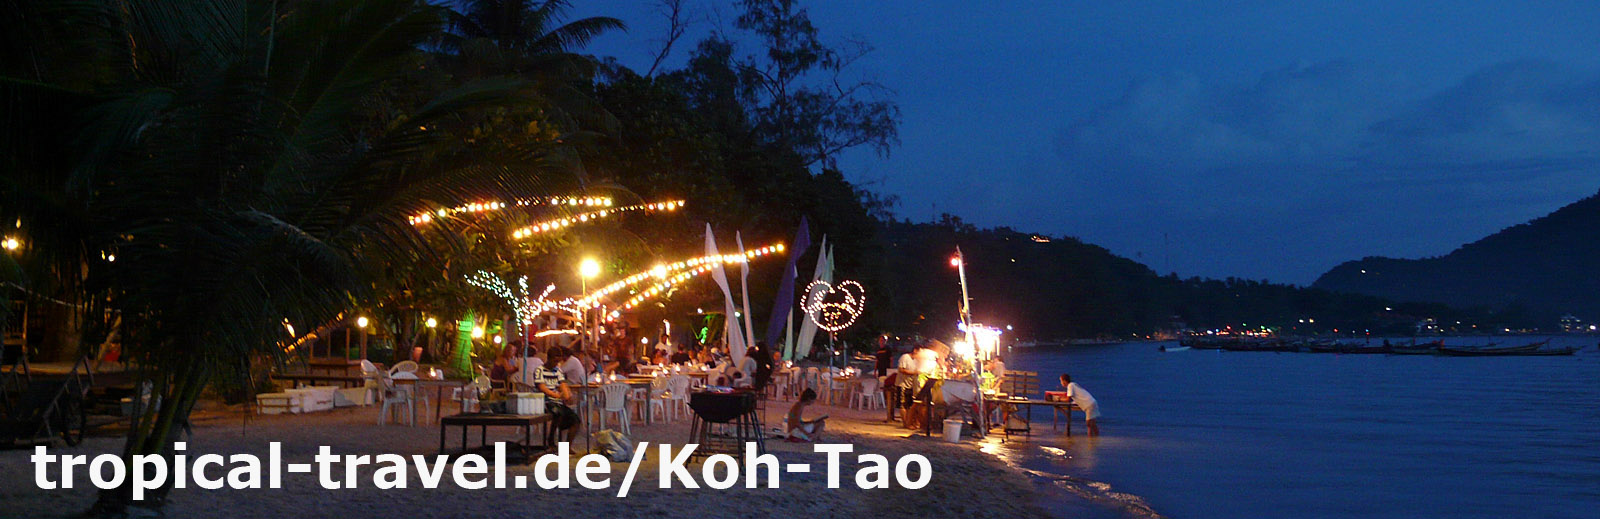 Koh Tao, Thailand